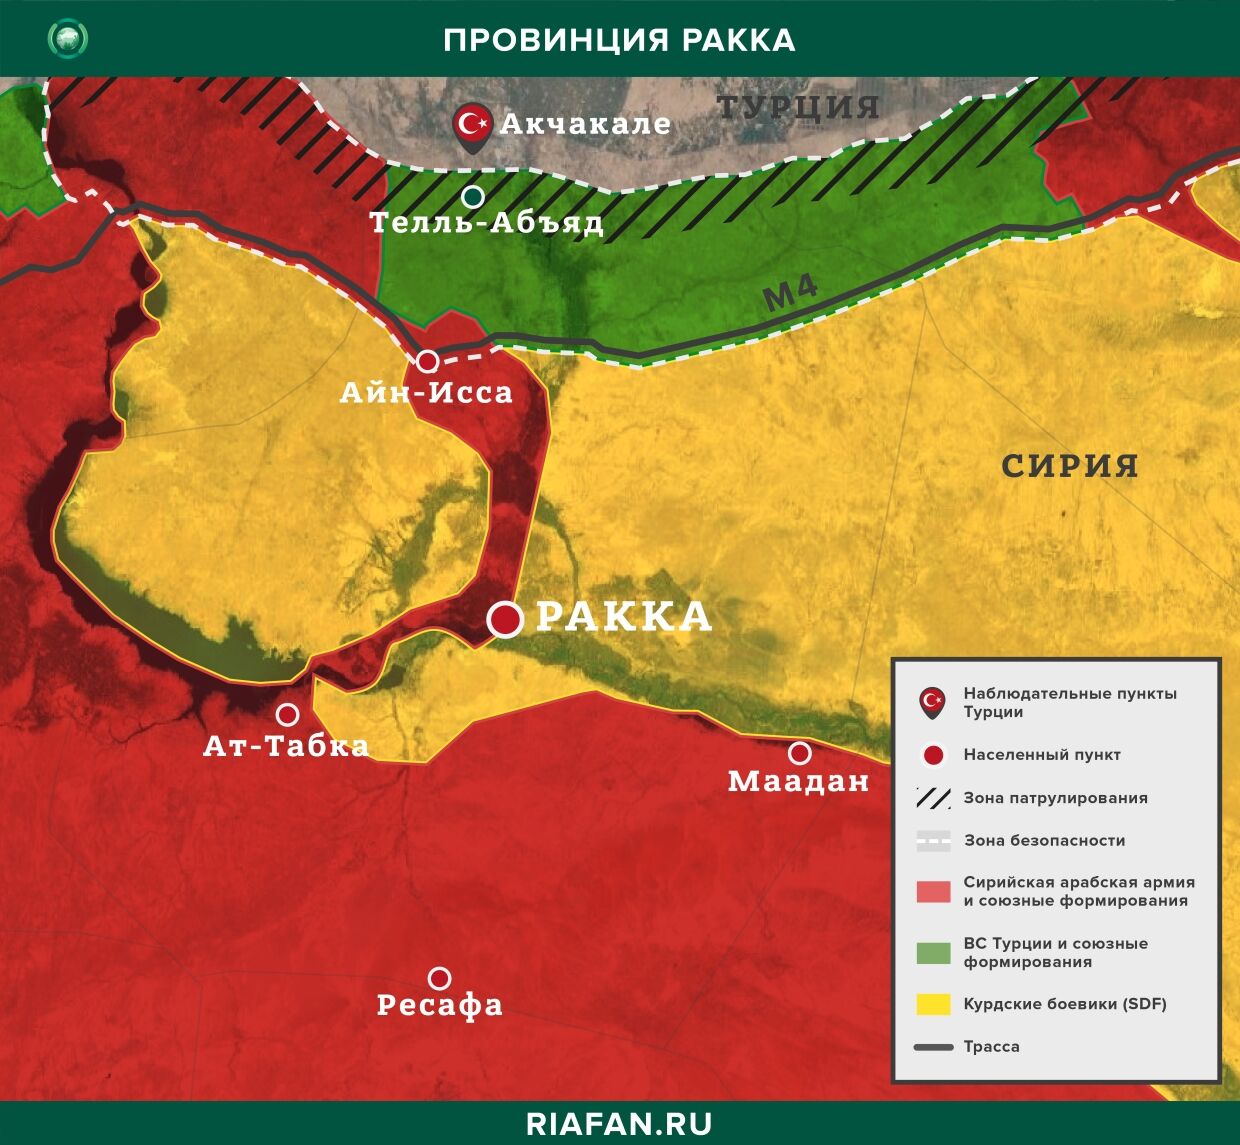 Nouvelles de Syrie 22 Peut 22.30: при теракте в Даръа пострадали два человека, в Хасаке ликвидированы 10 курдских боевиков